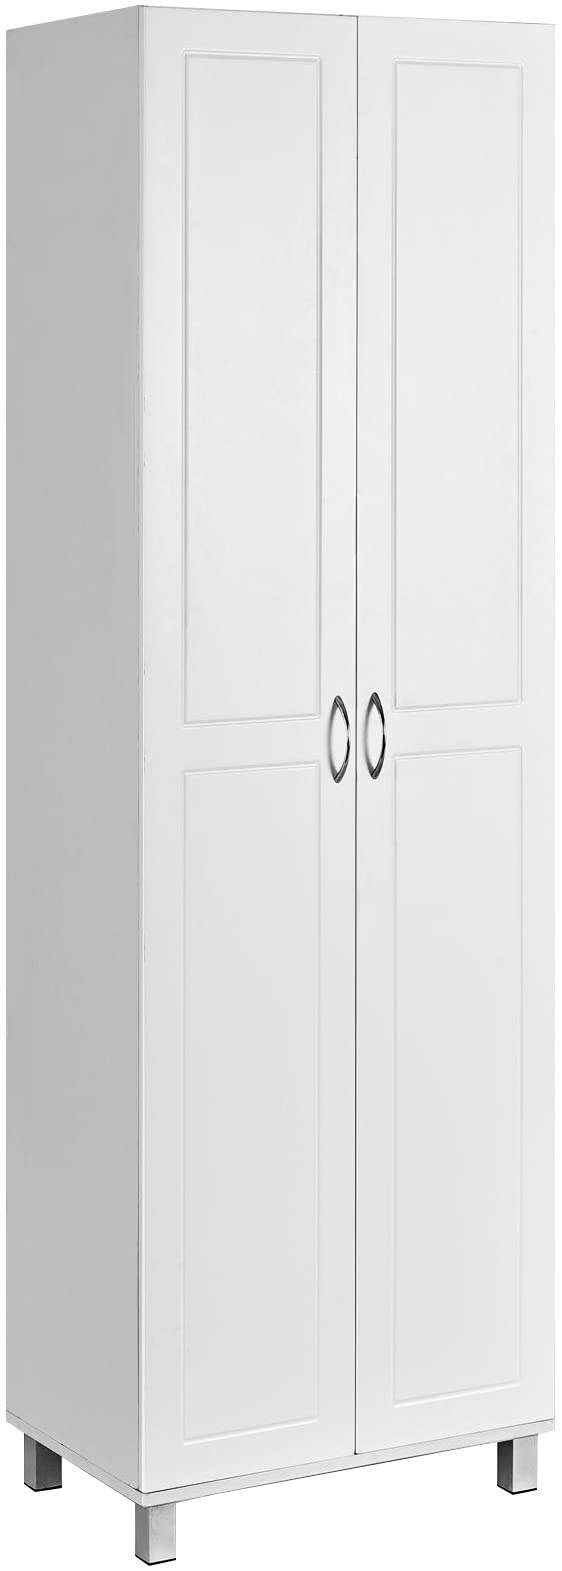 Giantex Easy-Clean Multi-Purpose Tall Doors Food Pantry